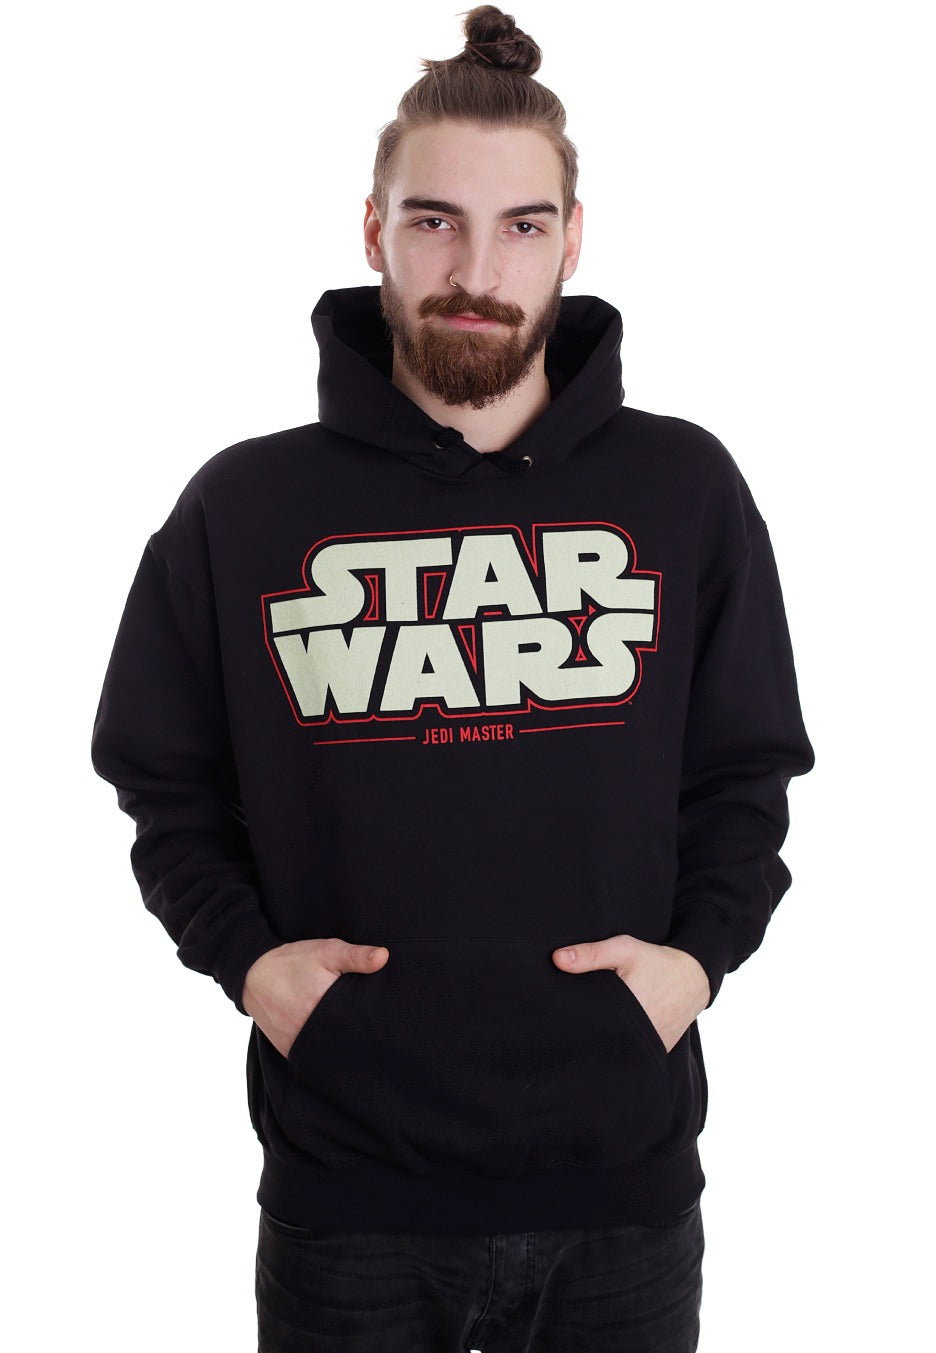 Star Wars - Yoda Jedi Master - Hoodie